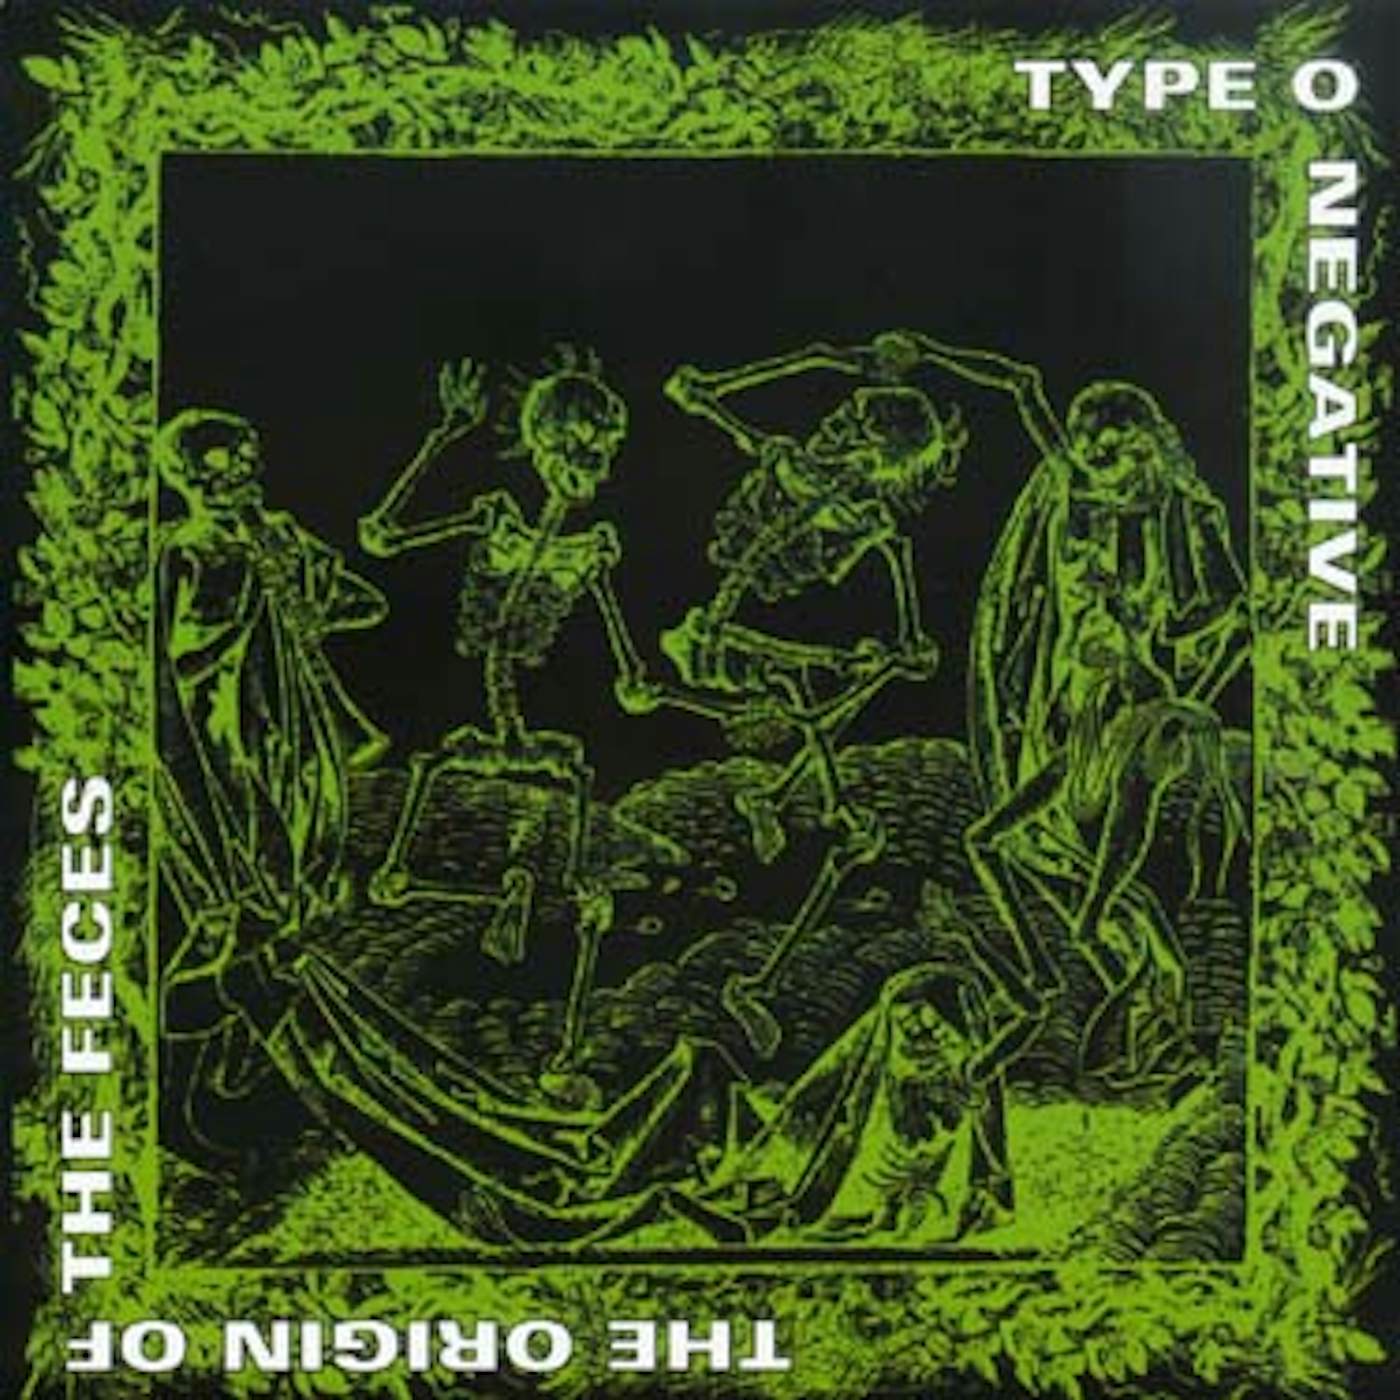 Type O Negative ORIGIN OF FECES CD